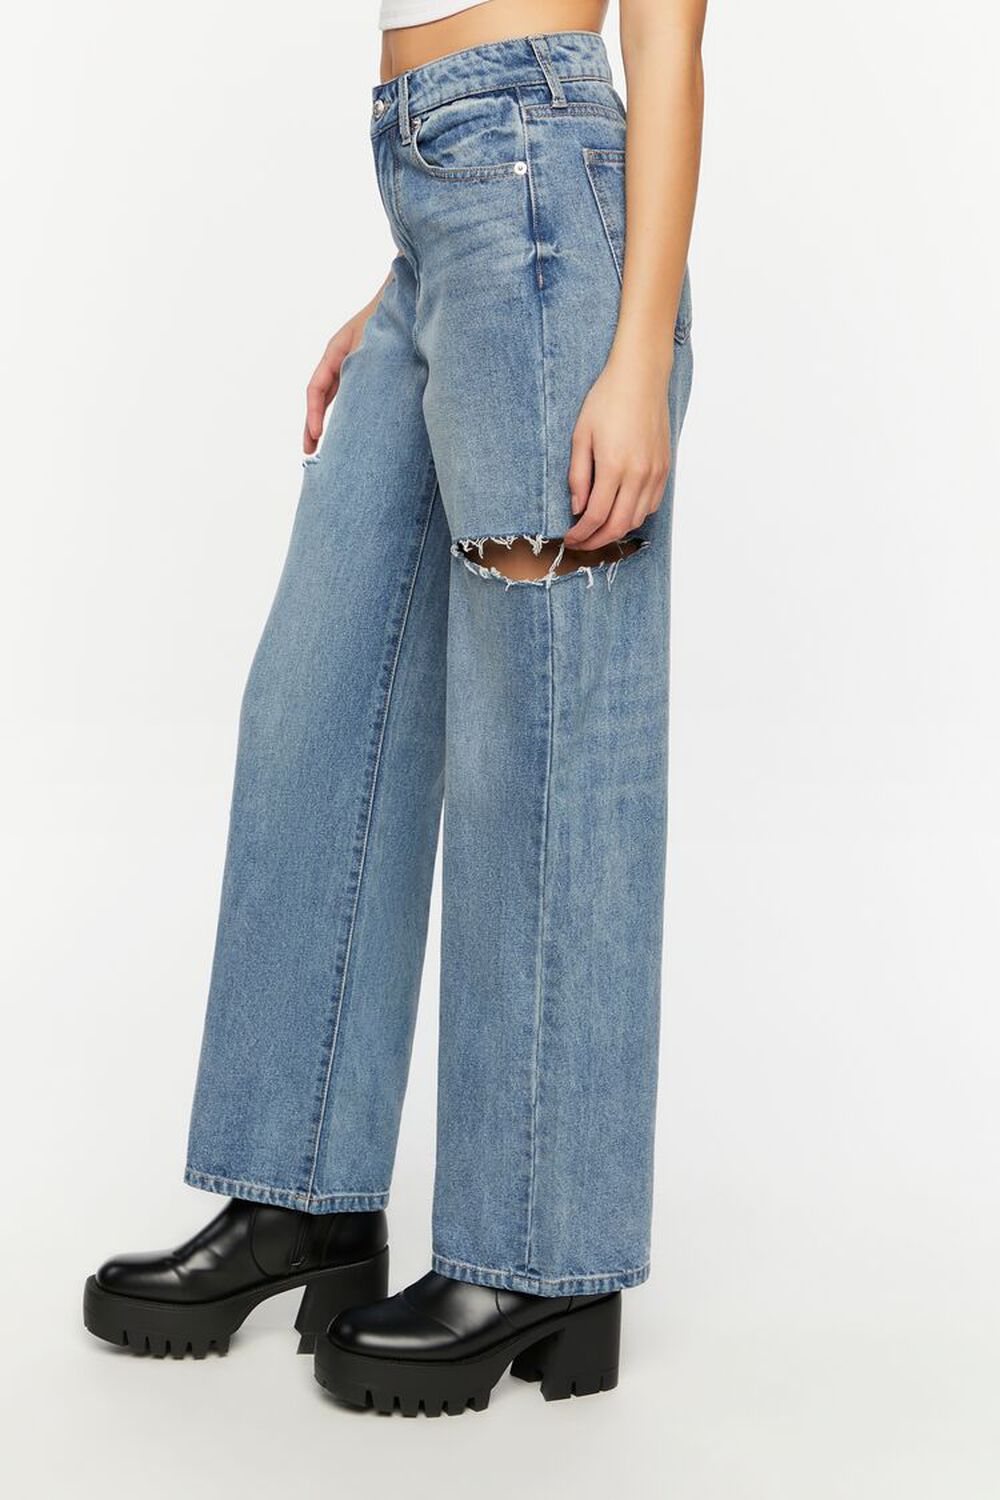 MEDIUM DENIM Split High-Rise 90s-Fit Jeans, image 2